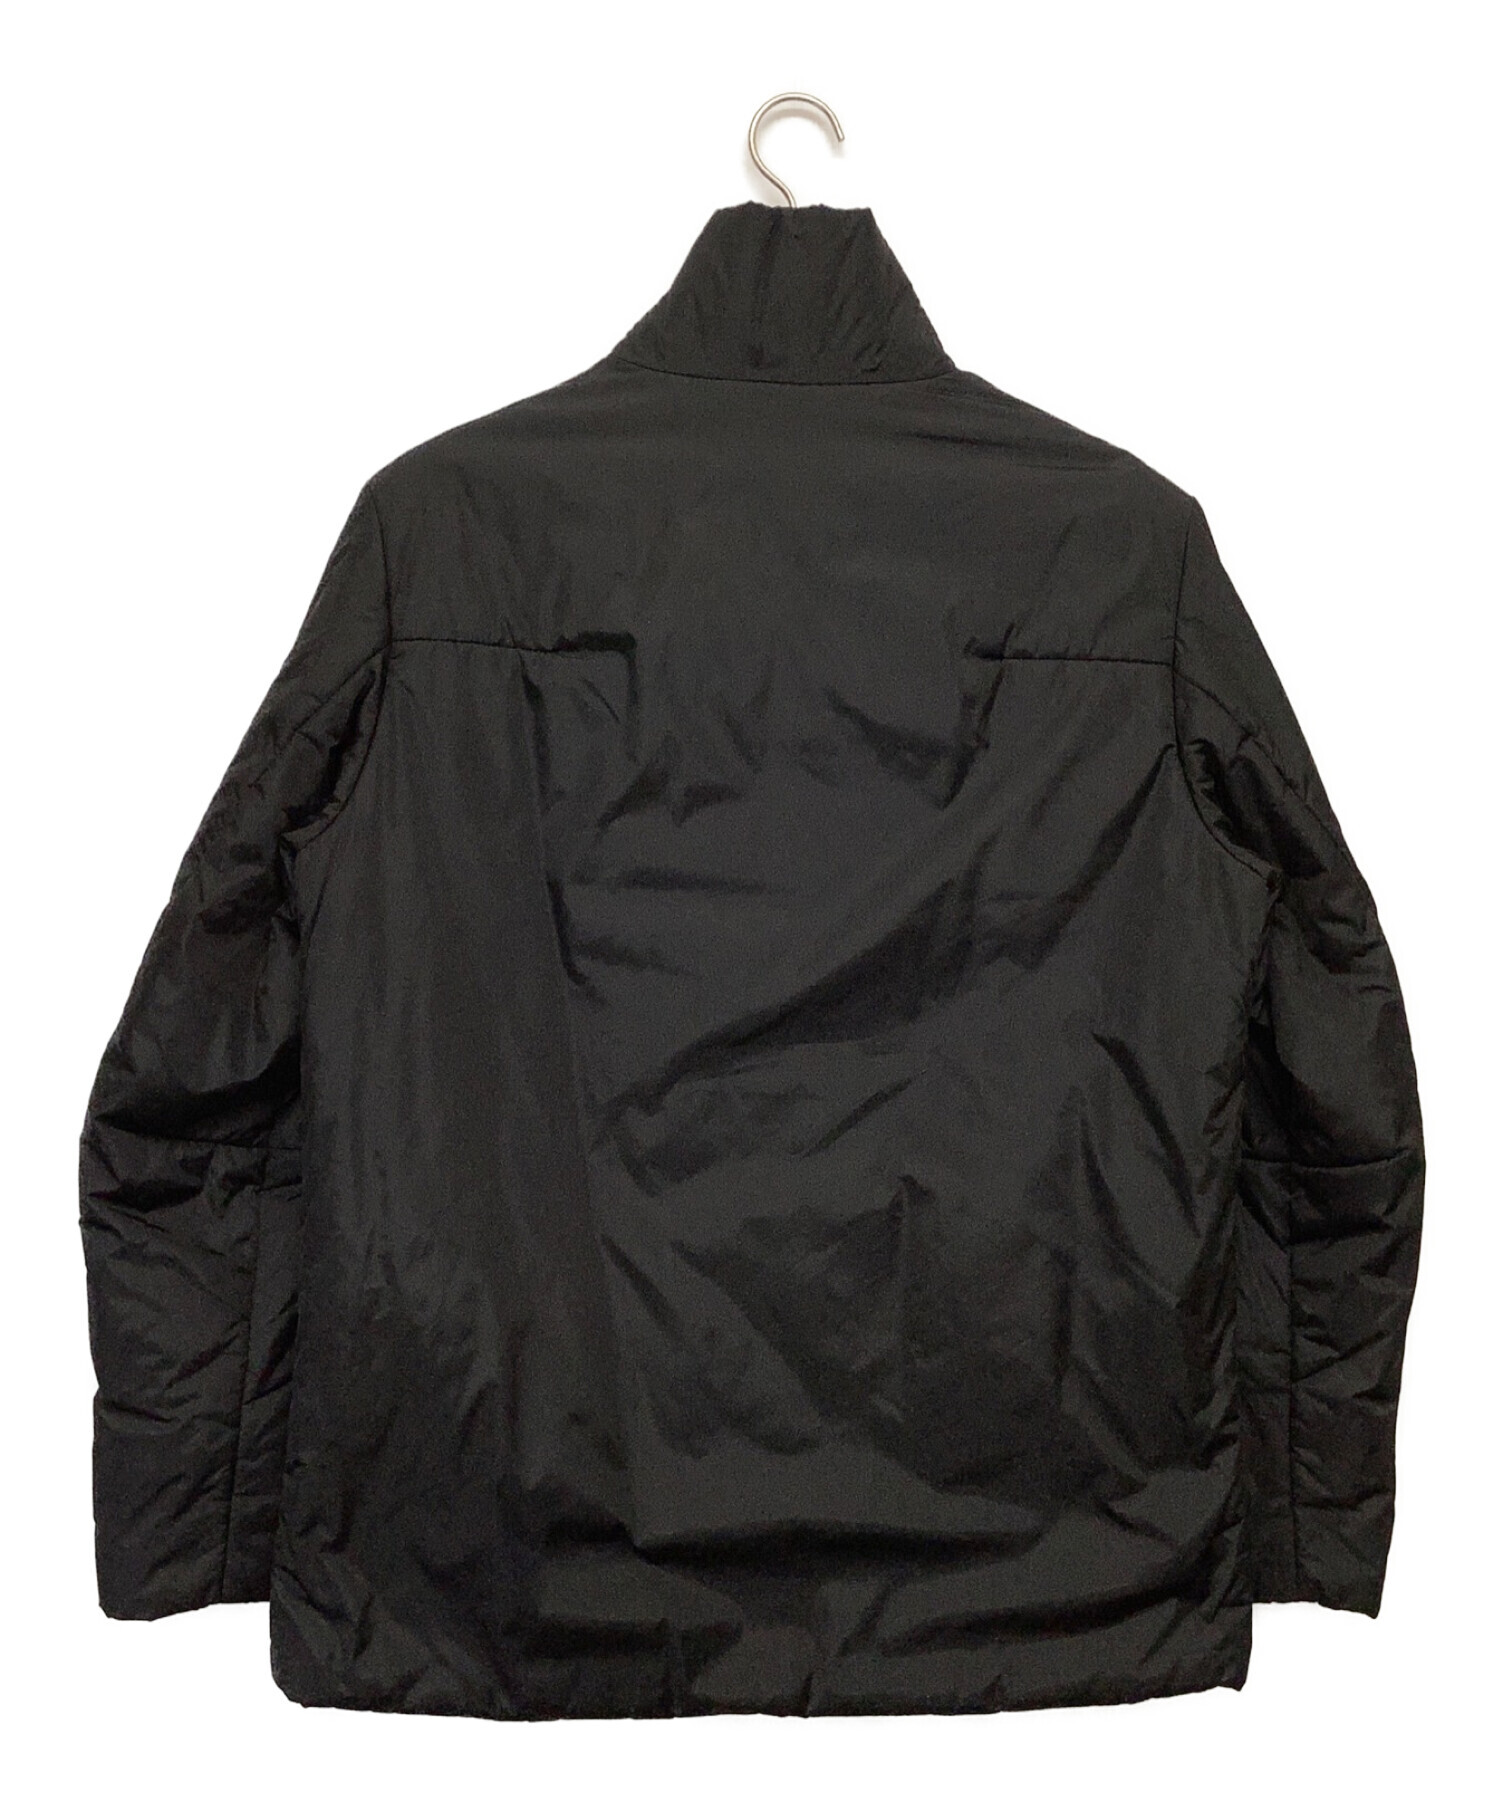 Prada sport 2way nylon jacket サイズ46 大特価❗️